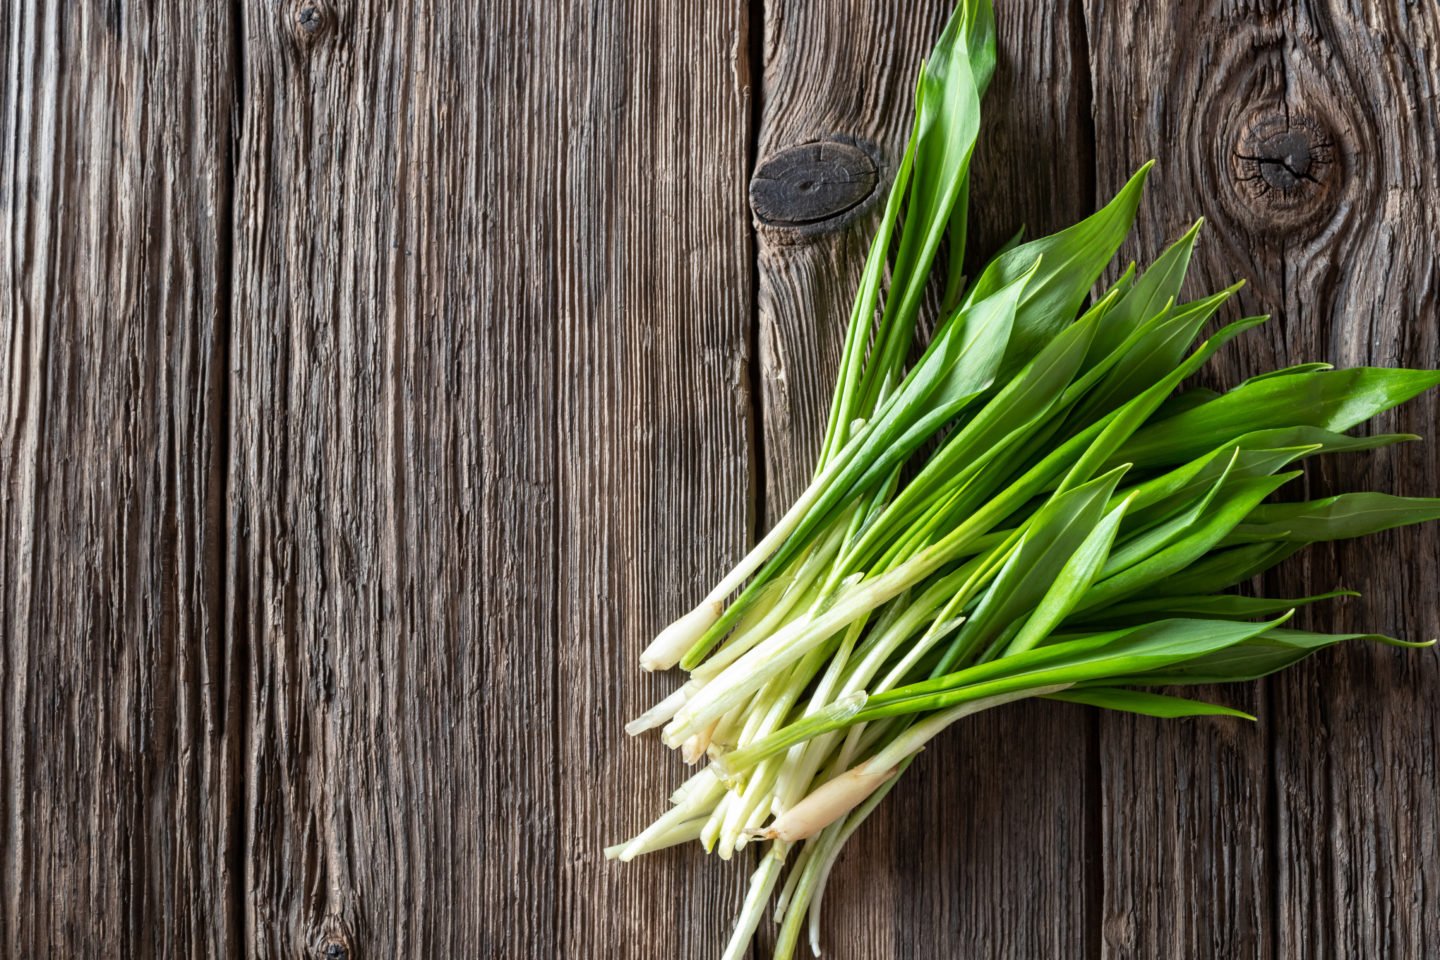 spring garlic as a green onion substitute